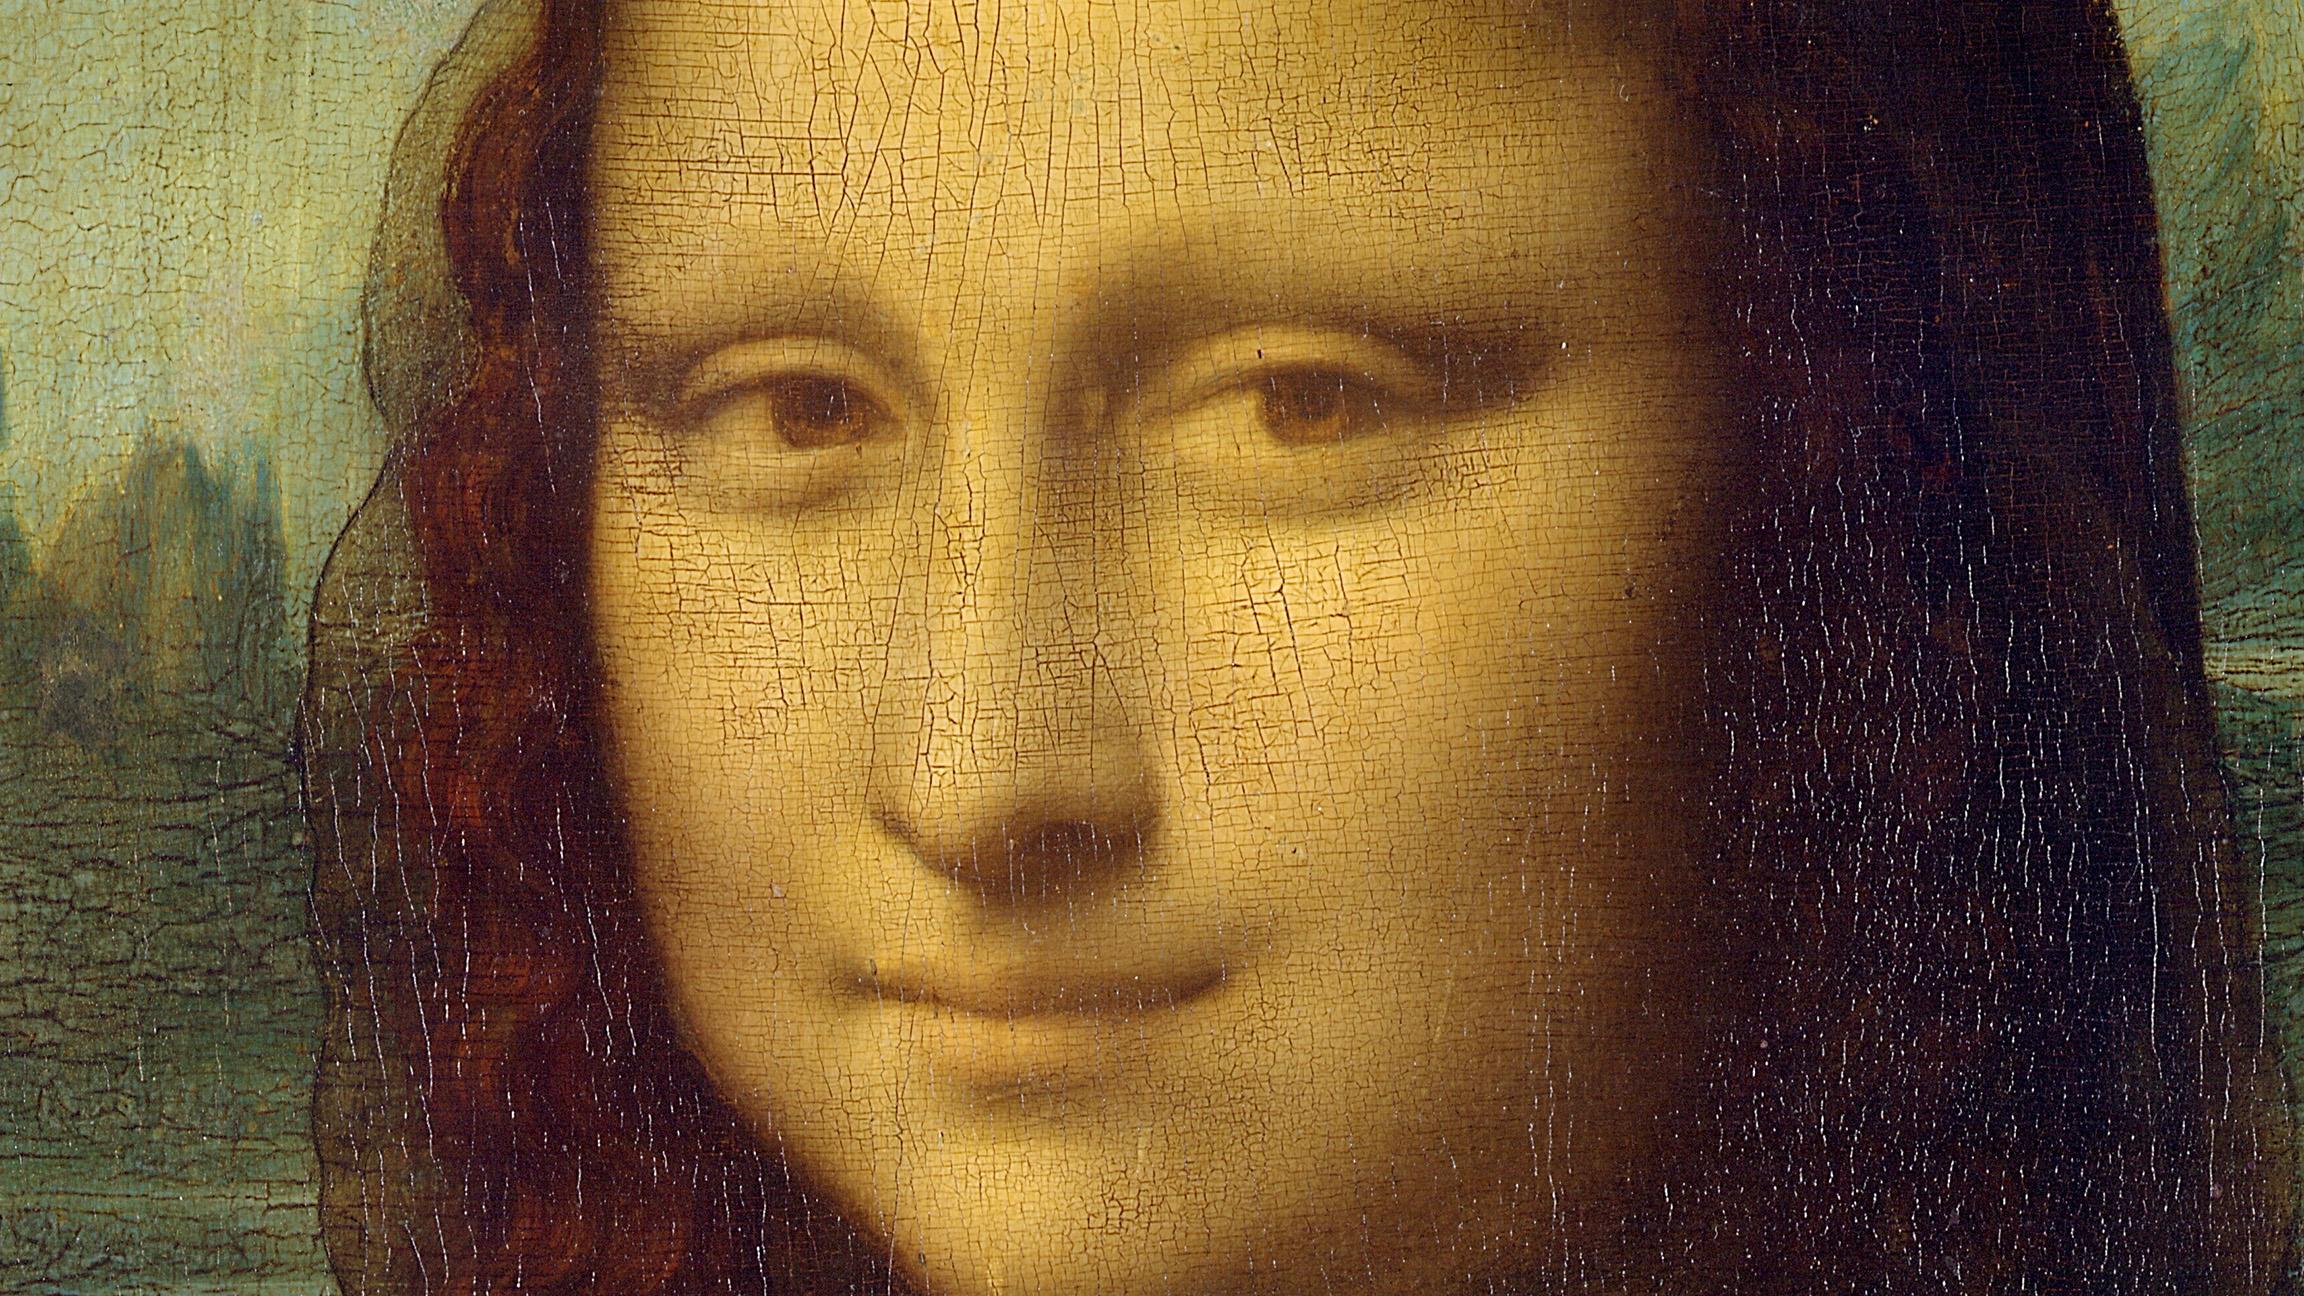 Close-up of “Mona Lisa” by Leonardo da Vinci